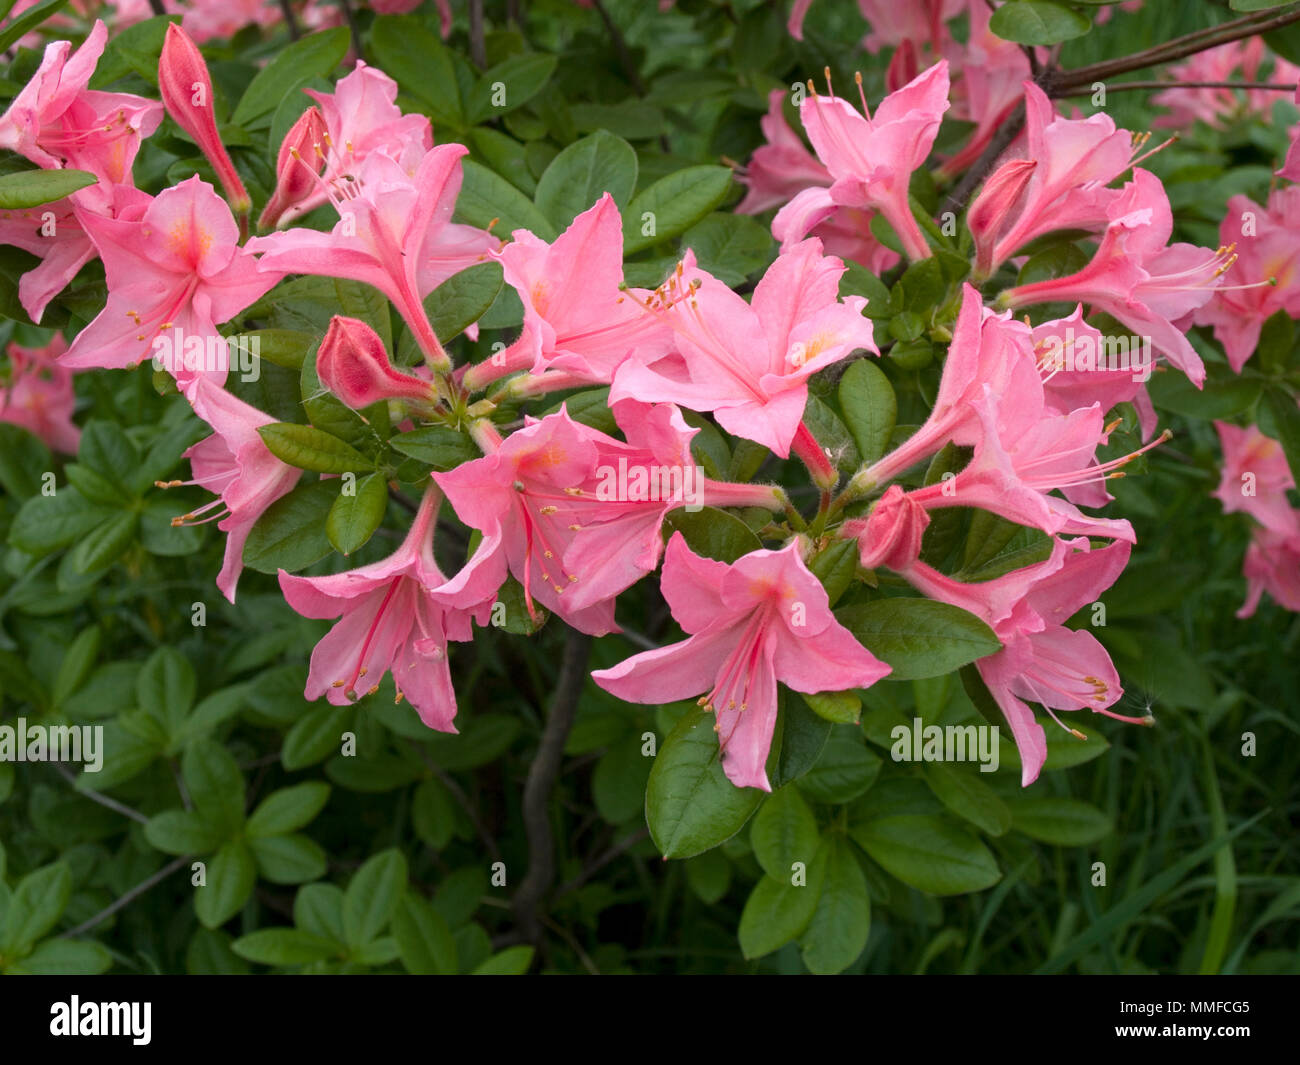 Flowering Rhododendron shrub Stock Photo